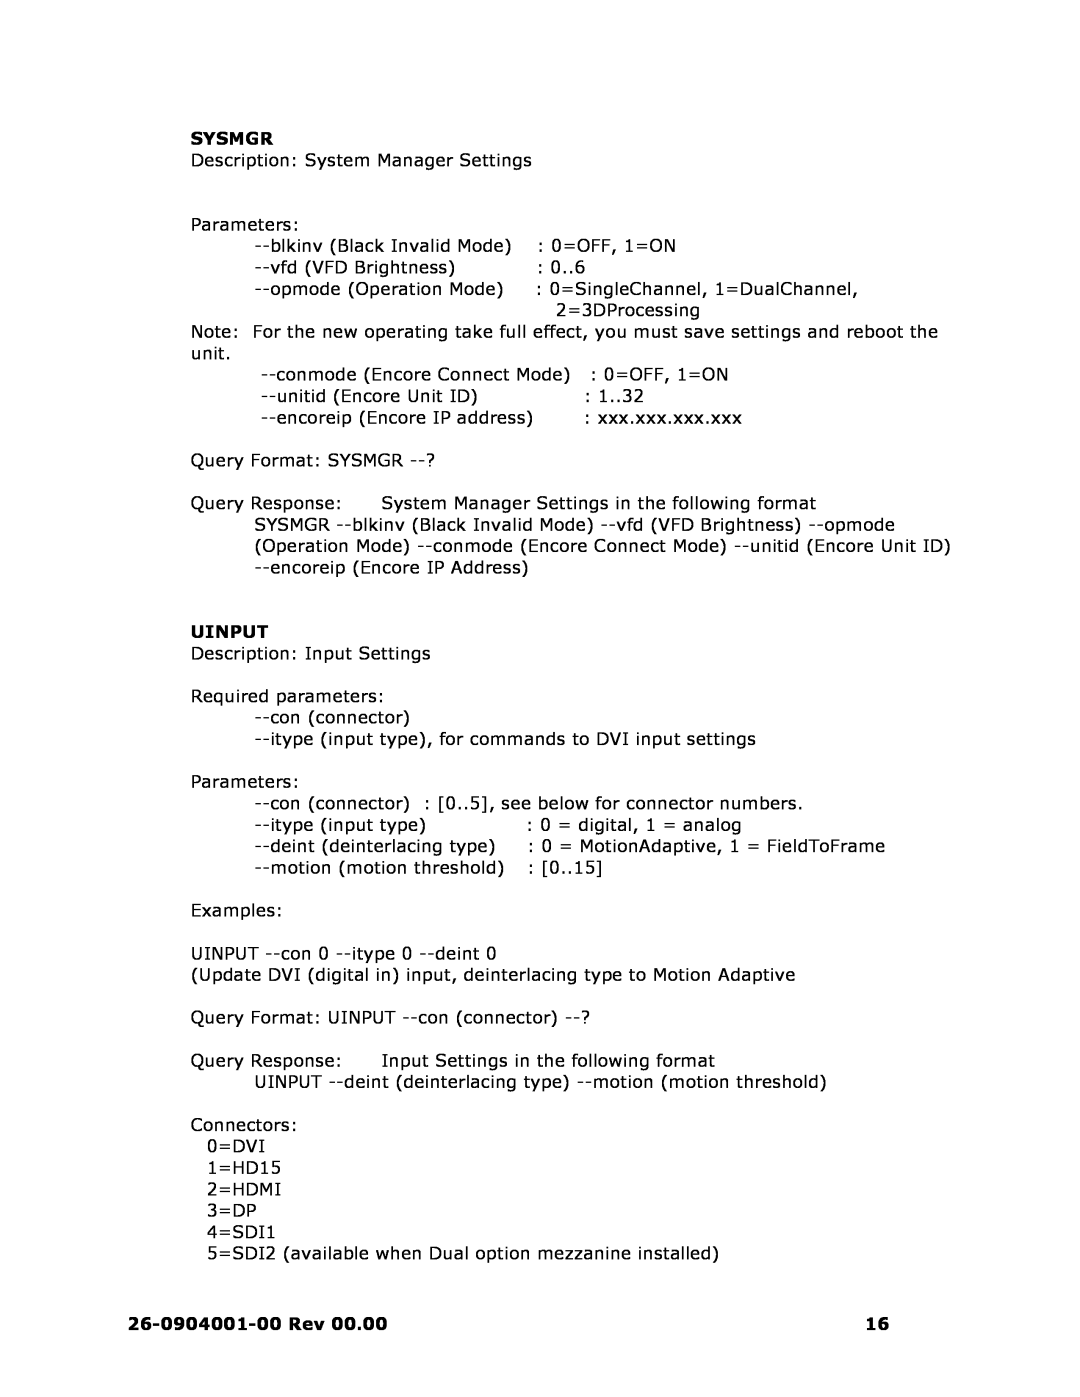 Barco II manual Sysmgr, Uinput, 26-0904001-00 Rev 